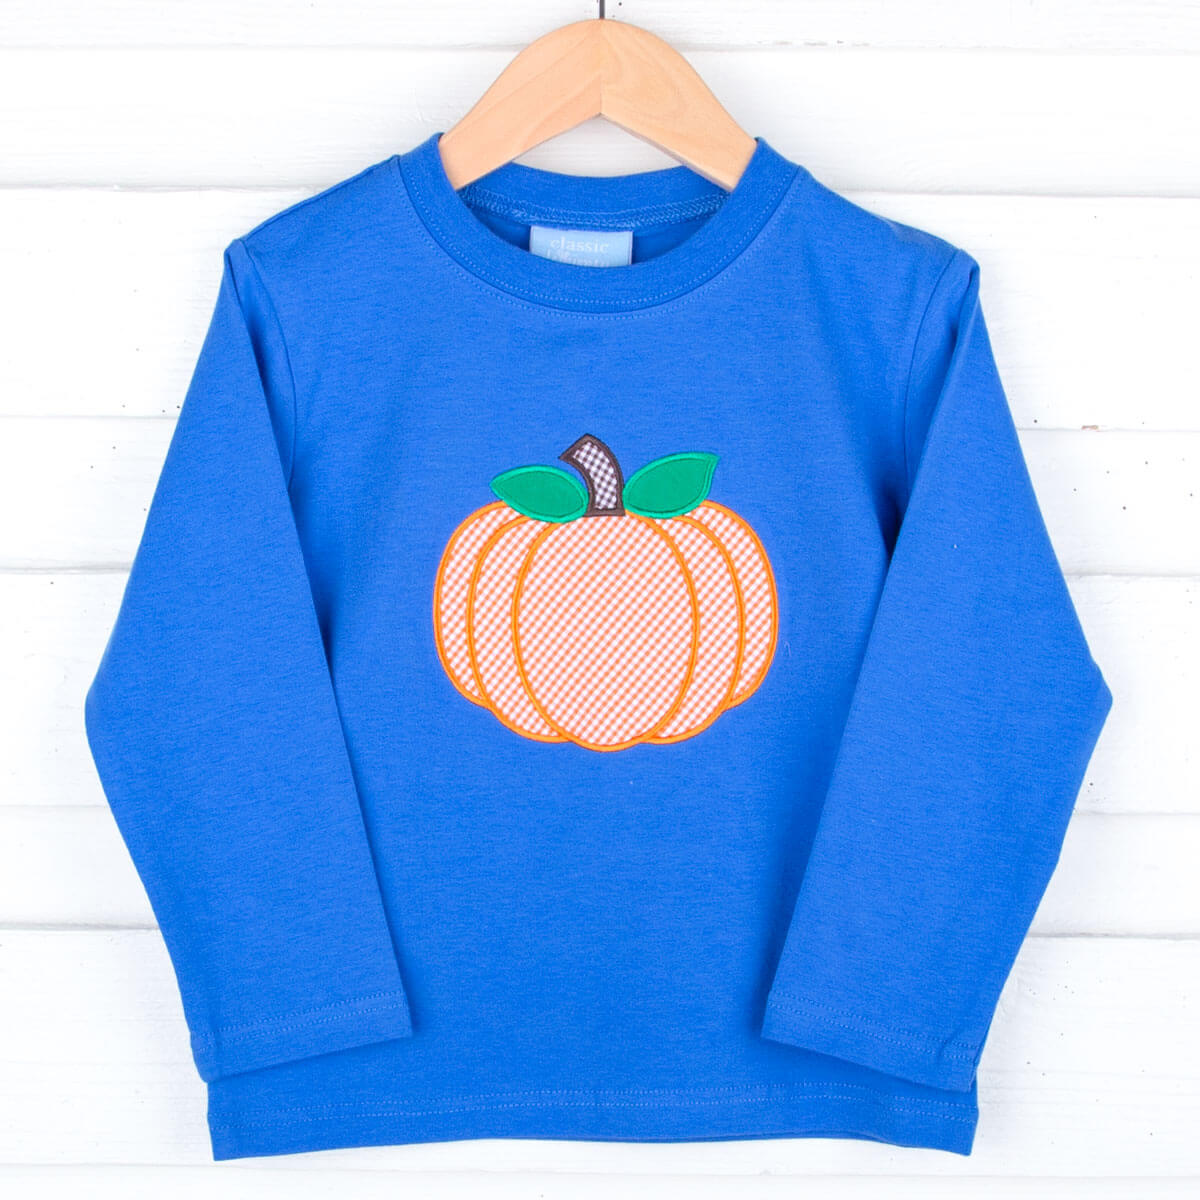 The Great Pumpkin Royal Blue Long Sleeve Shirt